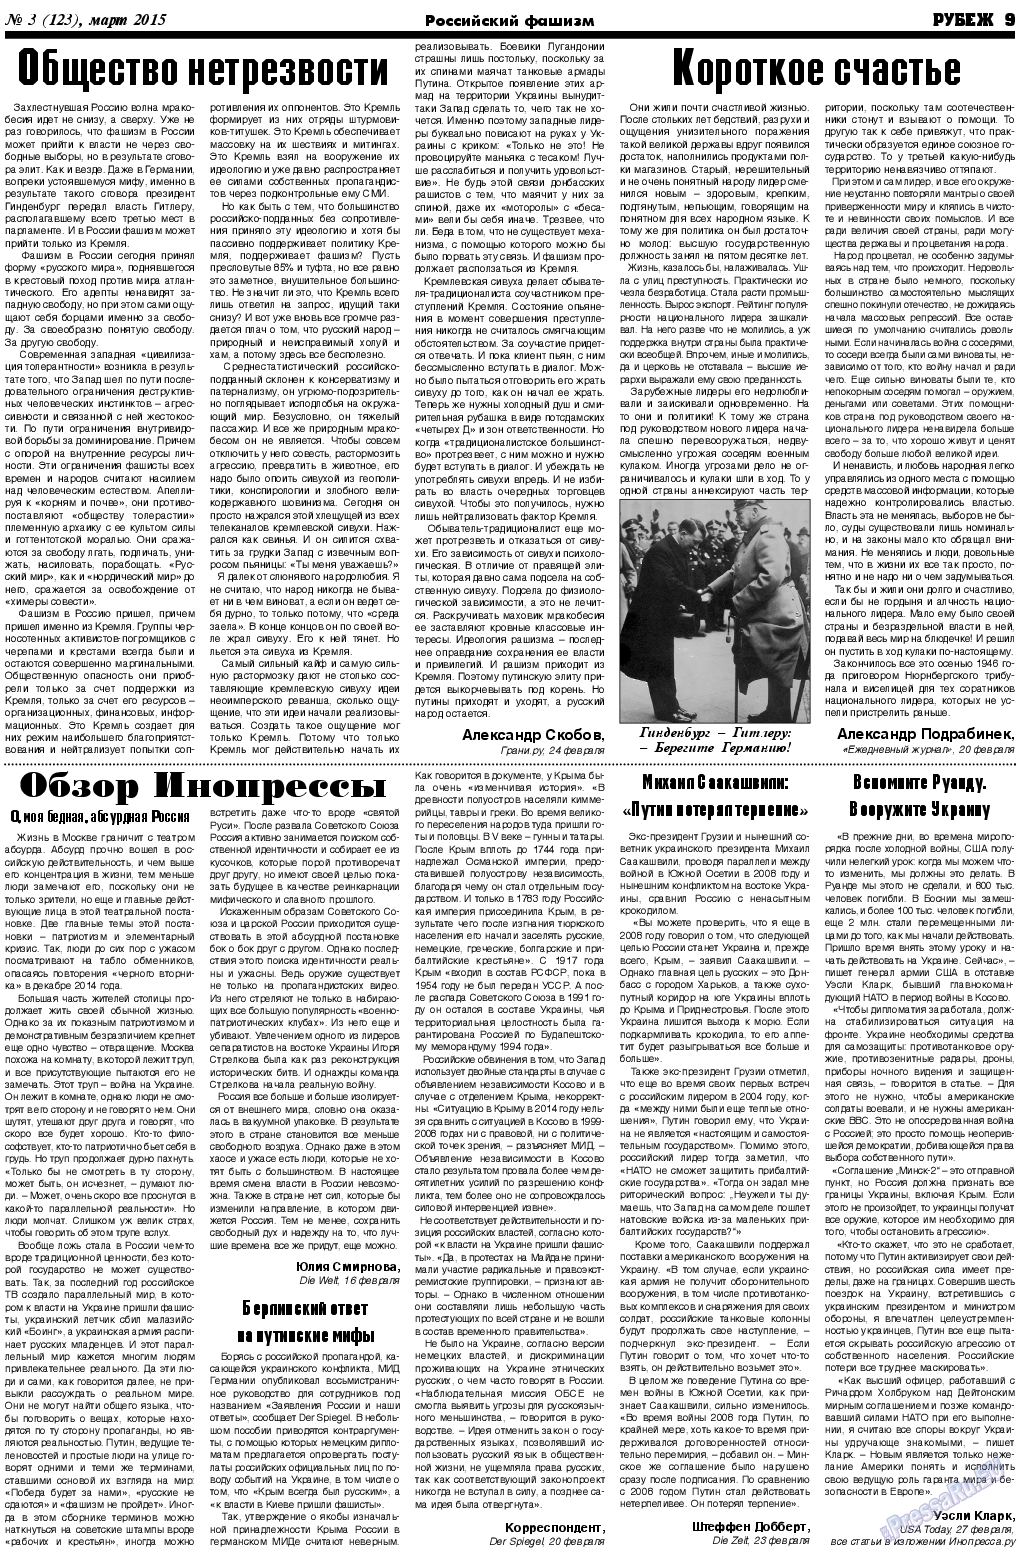 Рубеж, газета. 2015 №3 стр.9